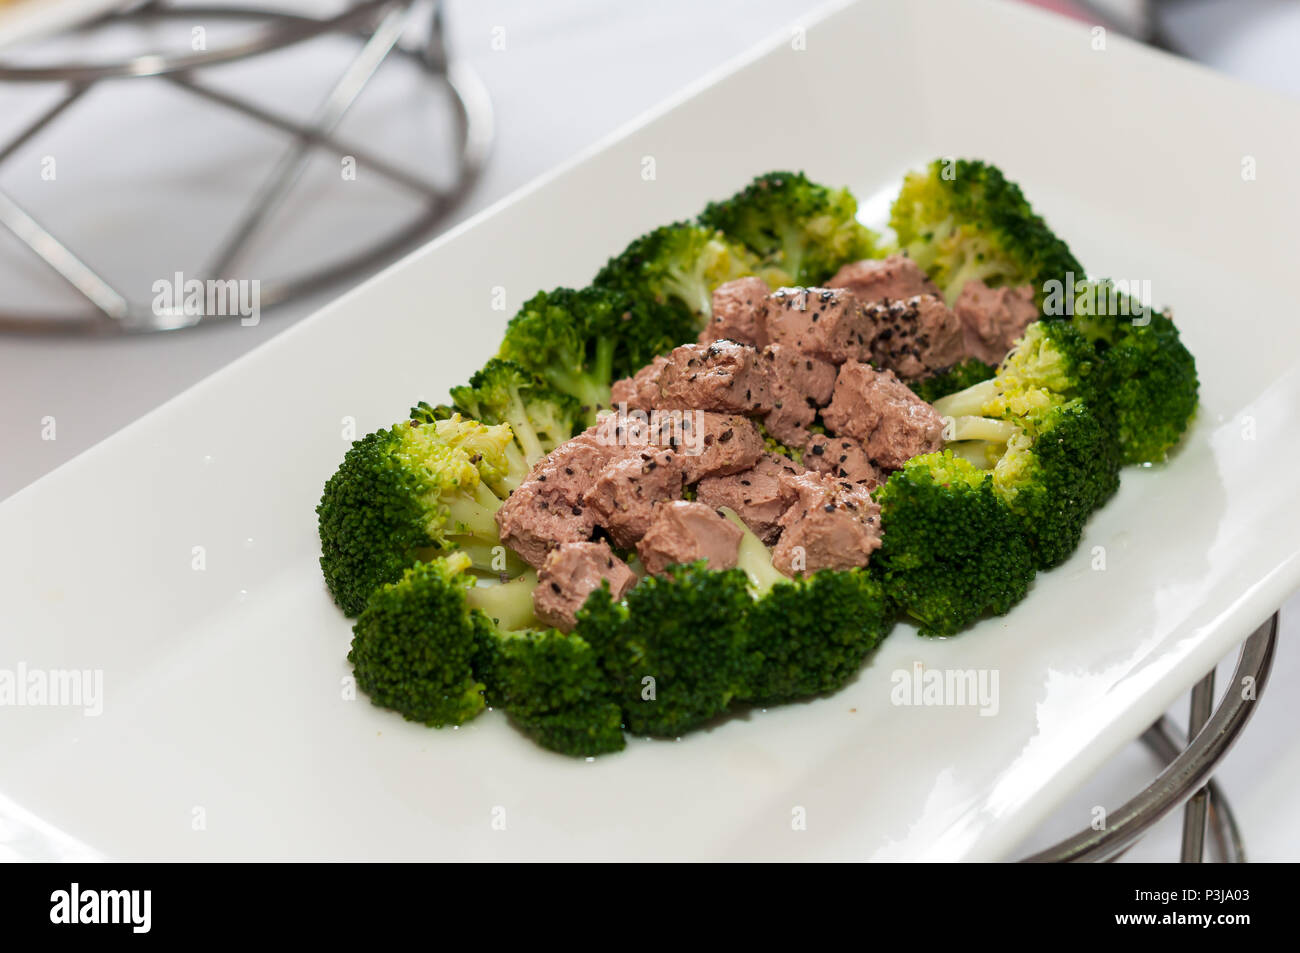 Foie gras and broccoli salad Stock Photo